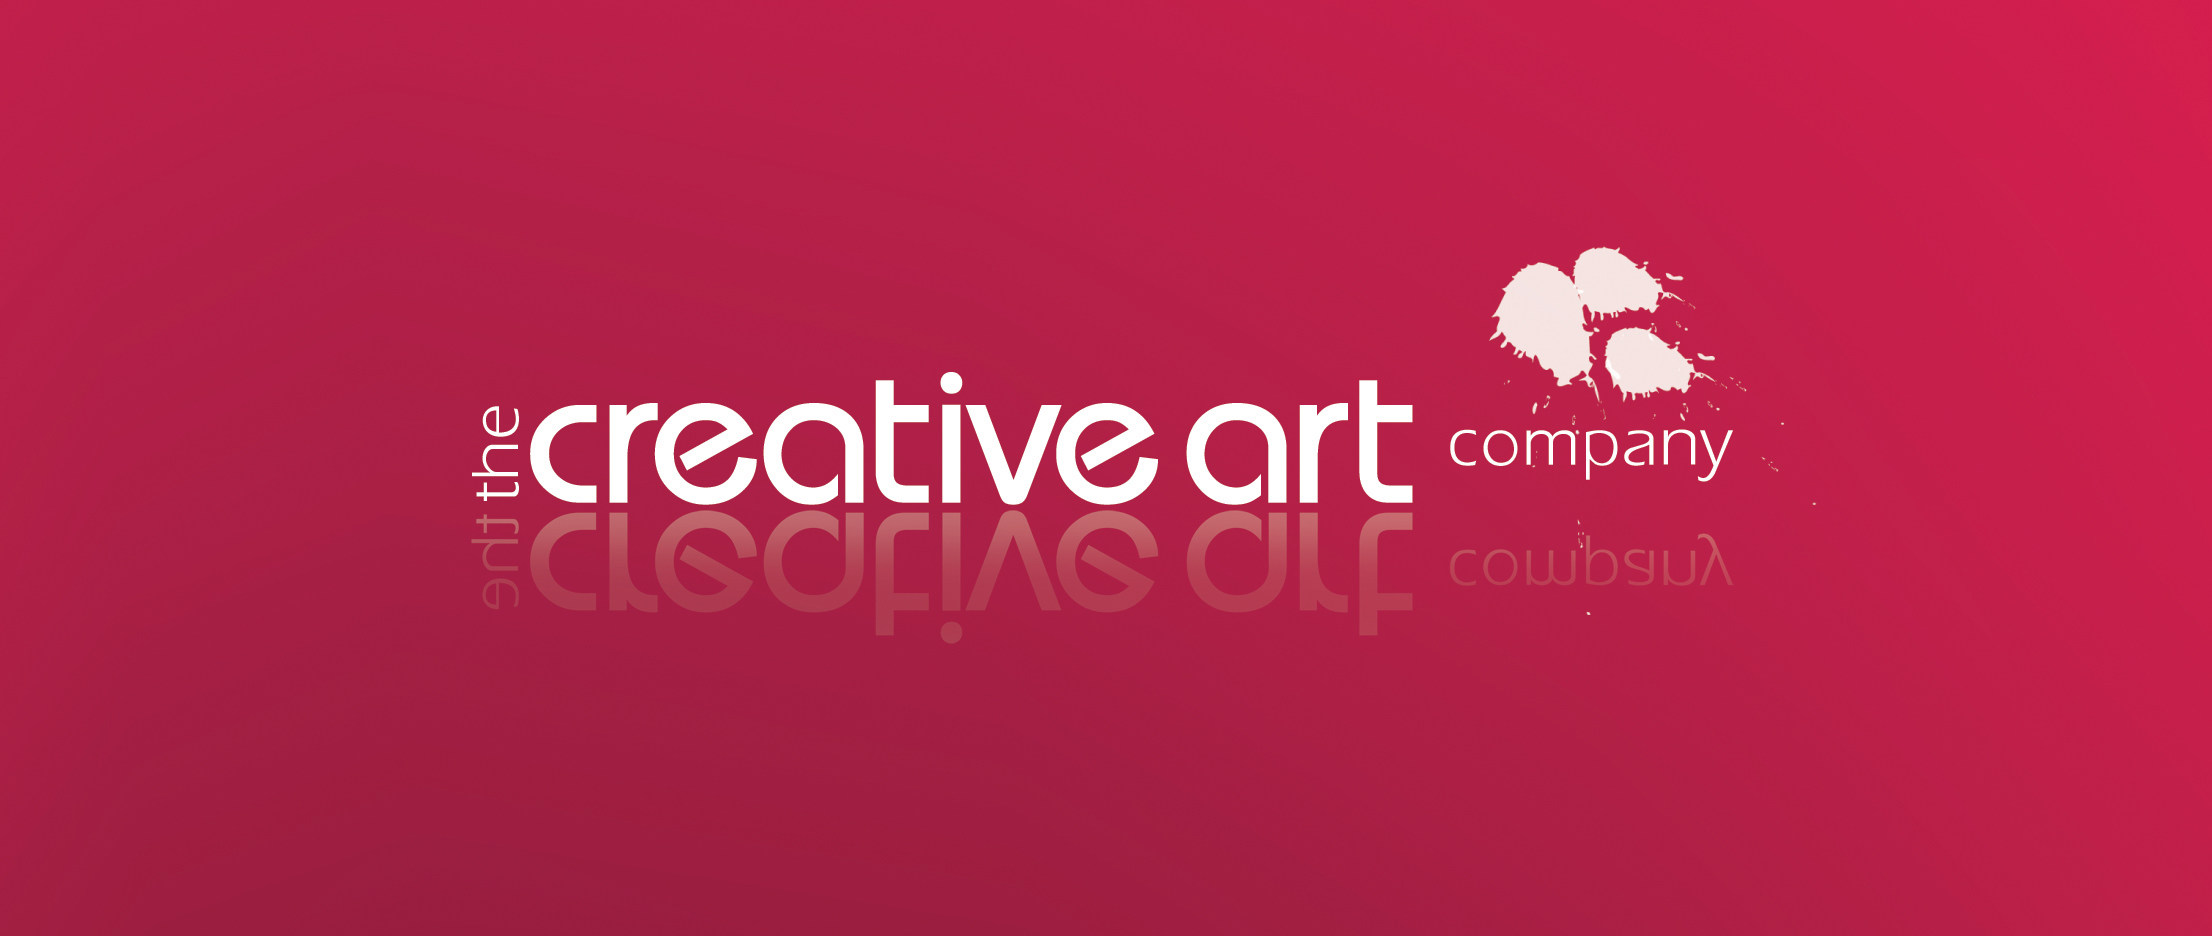 Art Creative Companies Logos